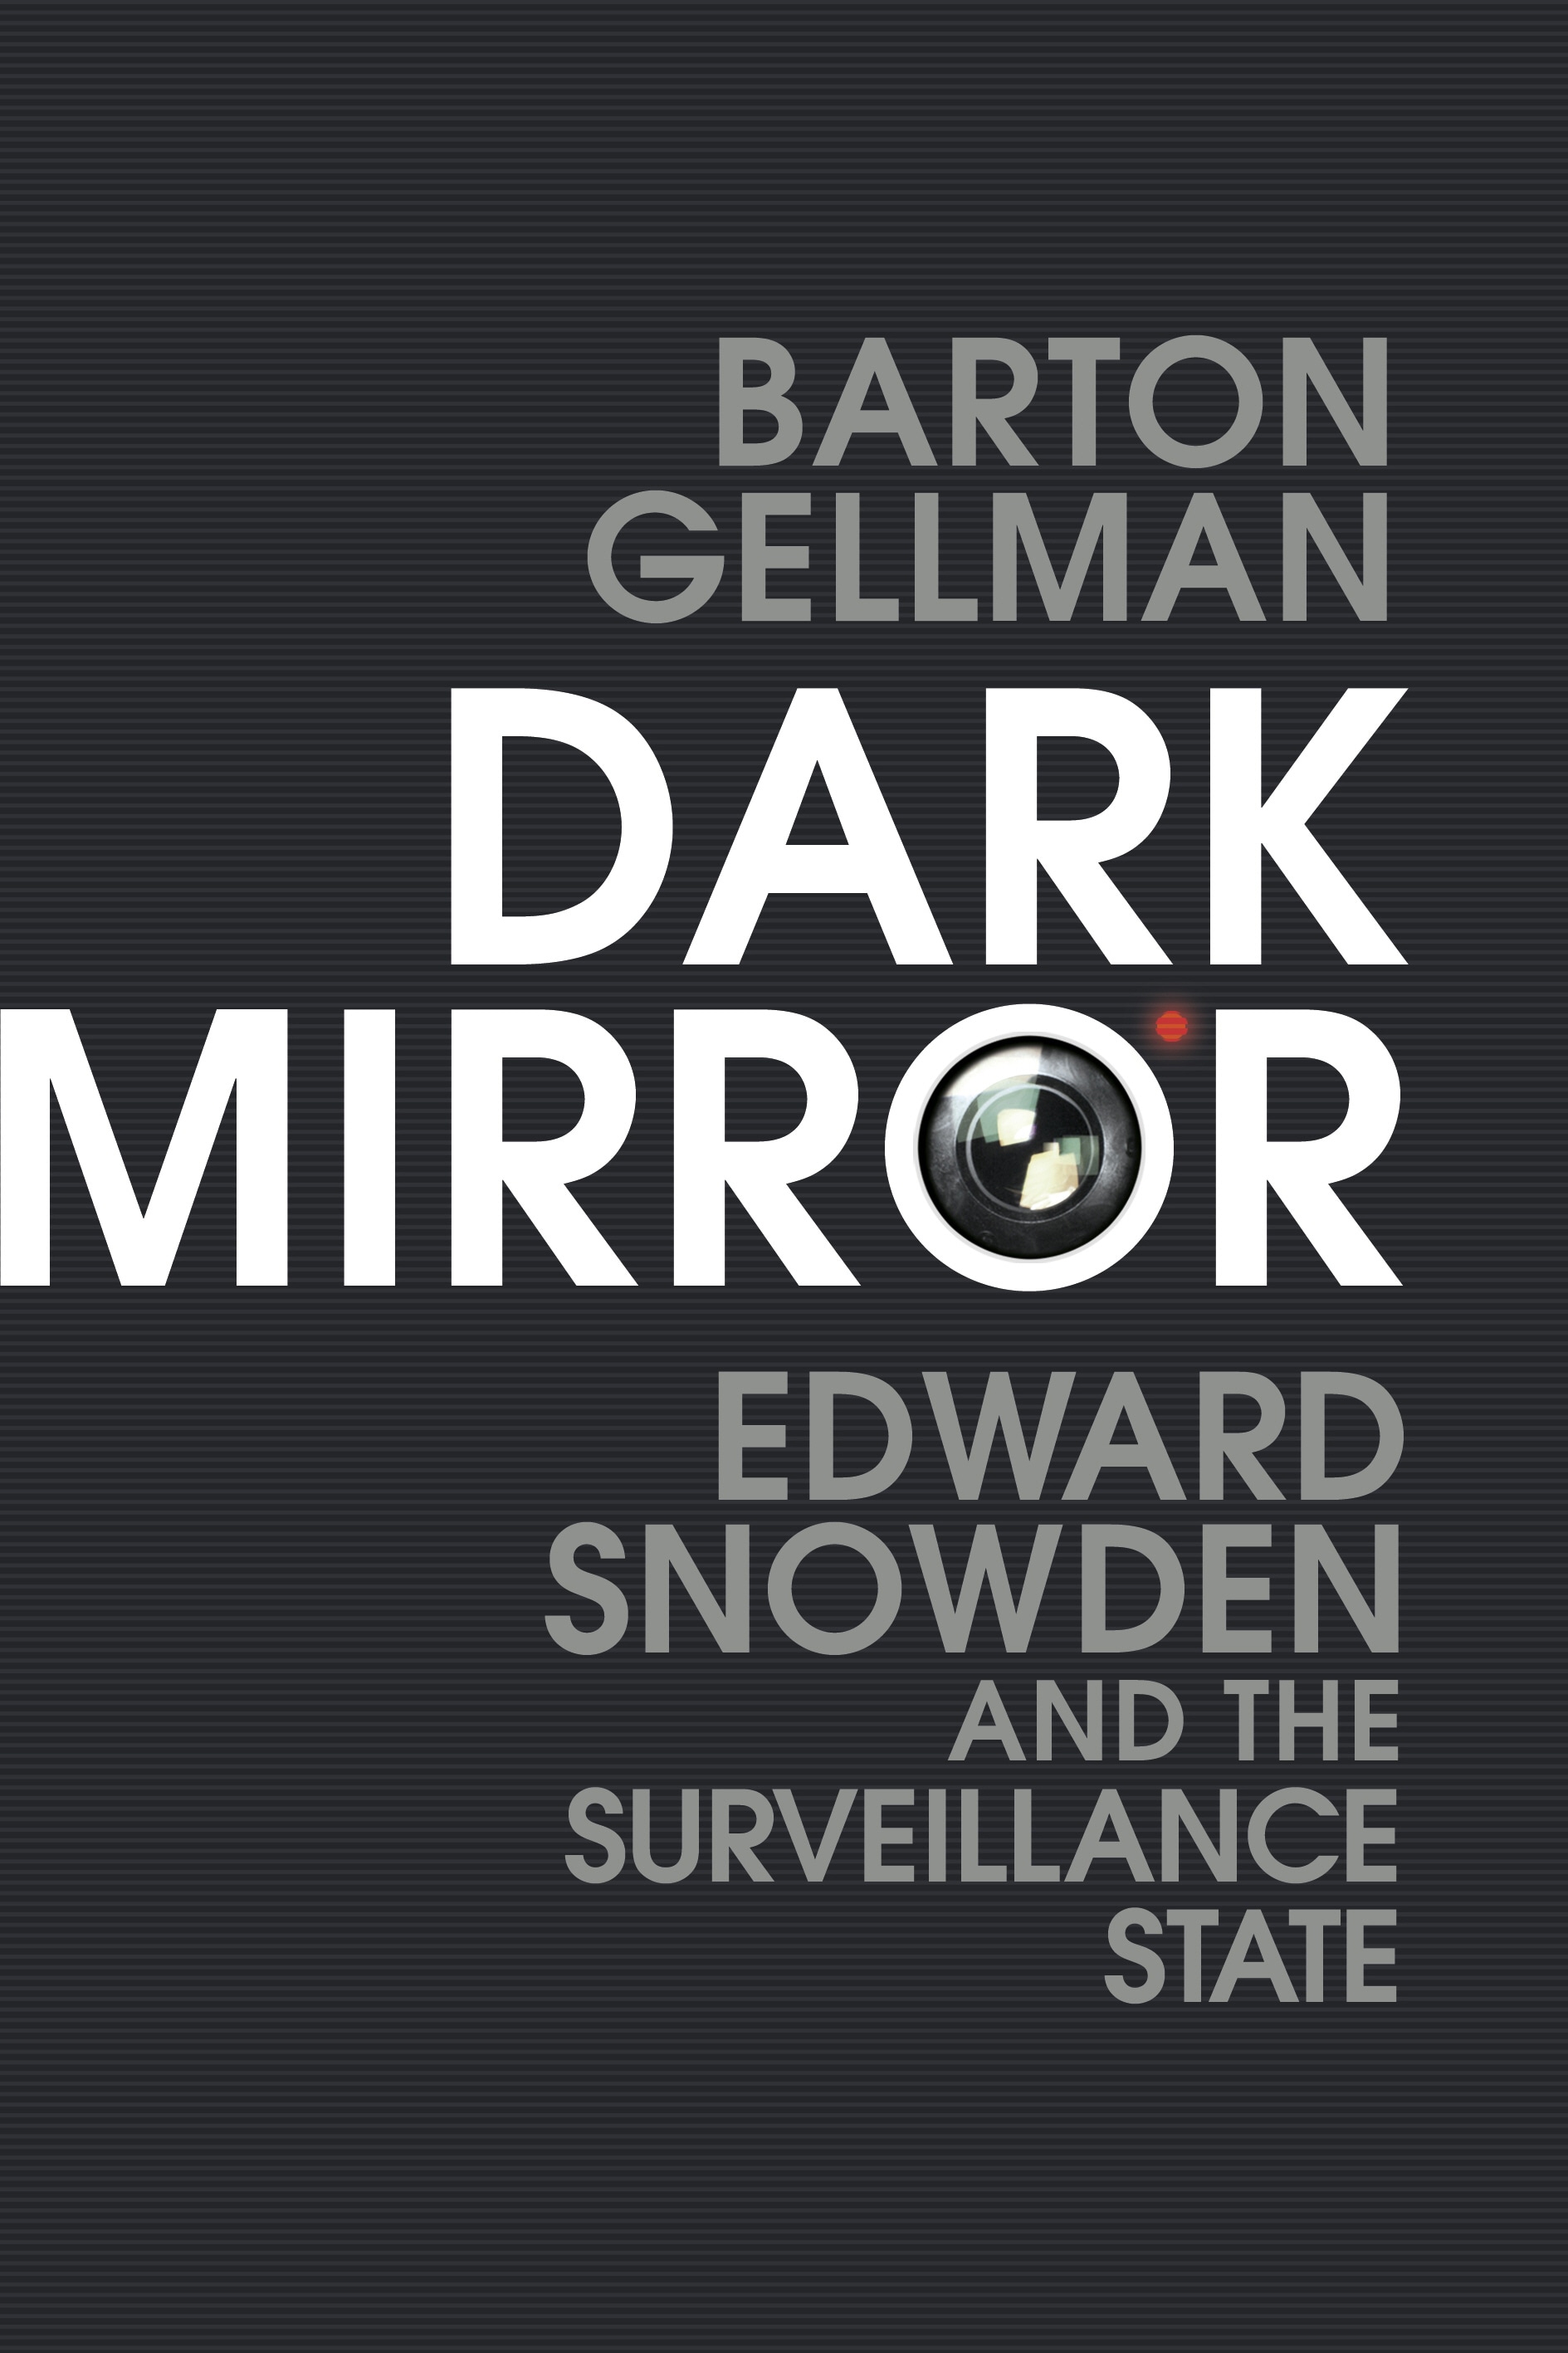 Book “Dark Mirror” by Barton Gellman — May 21, 2020